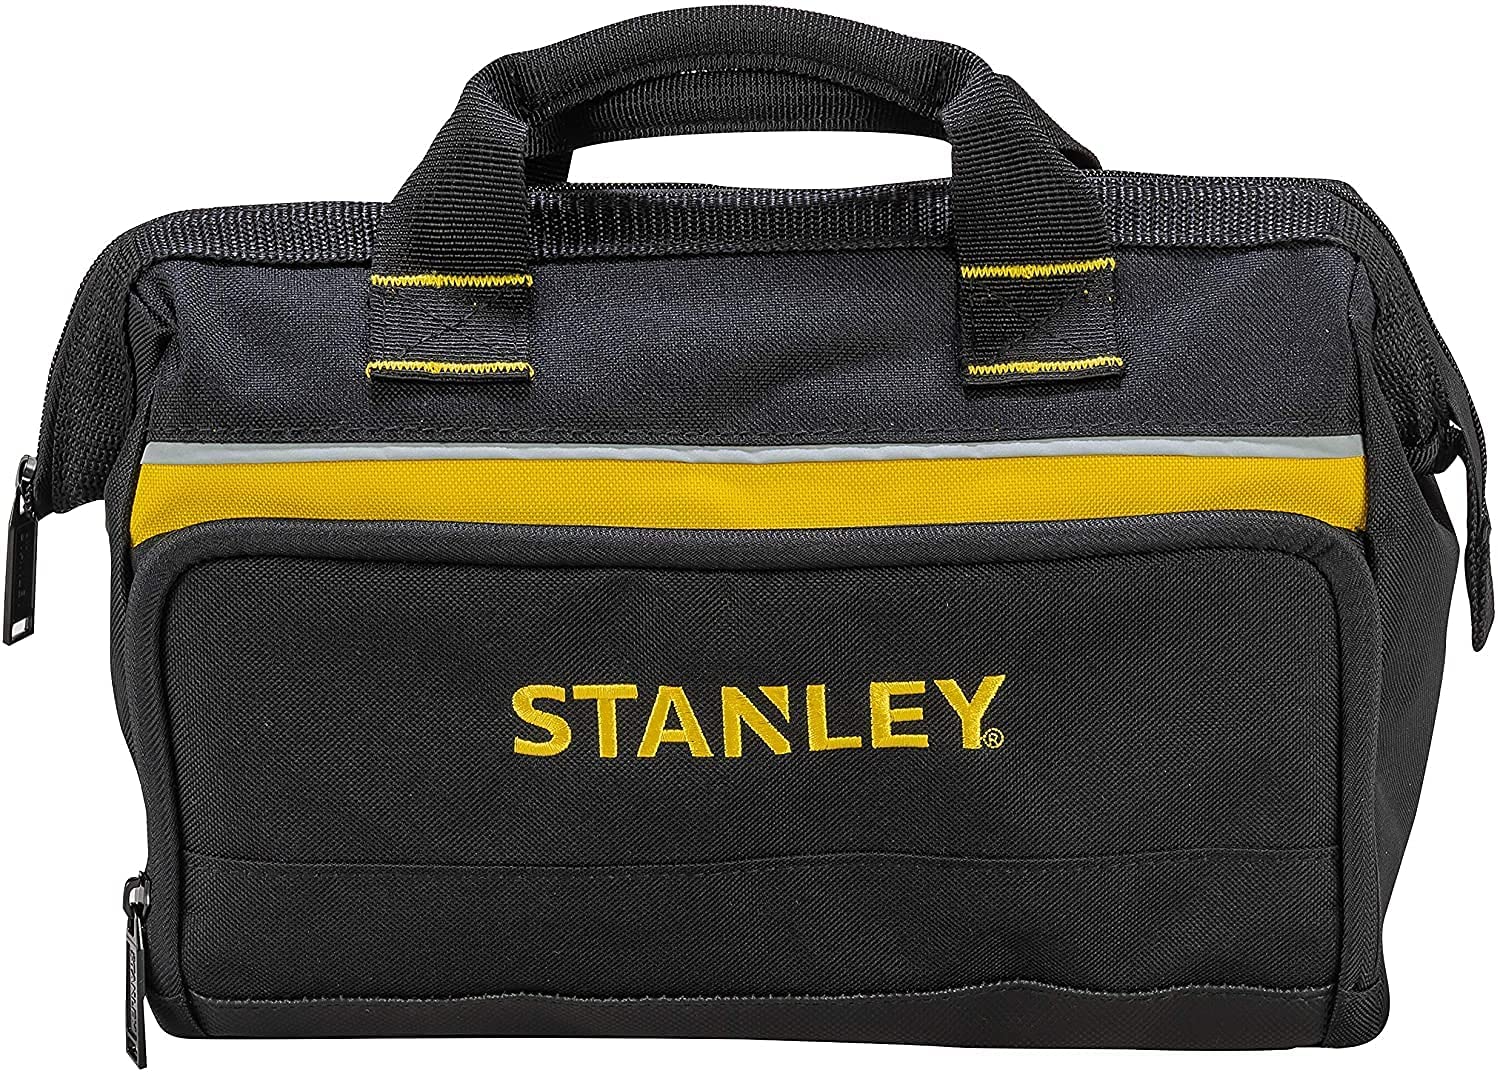 Bolsa Stanley 1-93-330 medidas 30x25x13